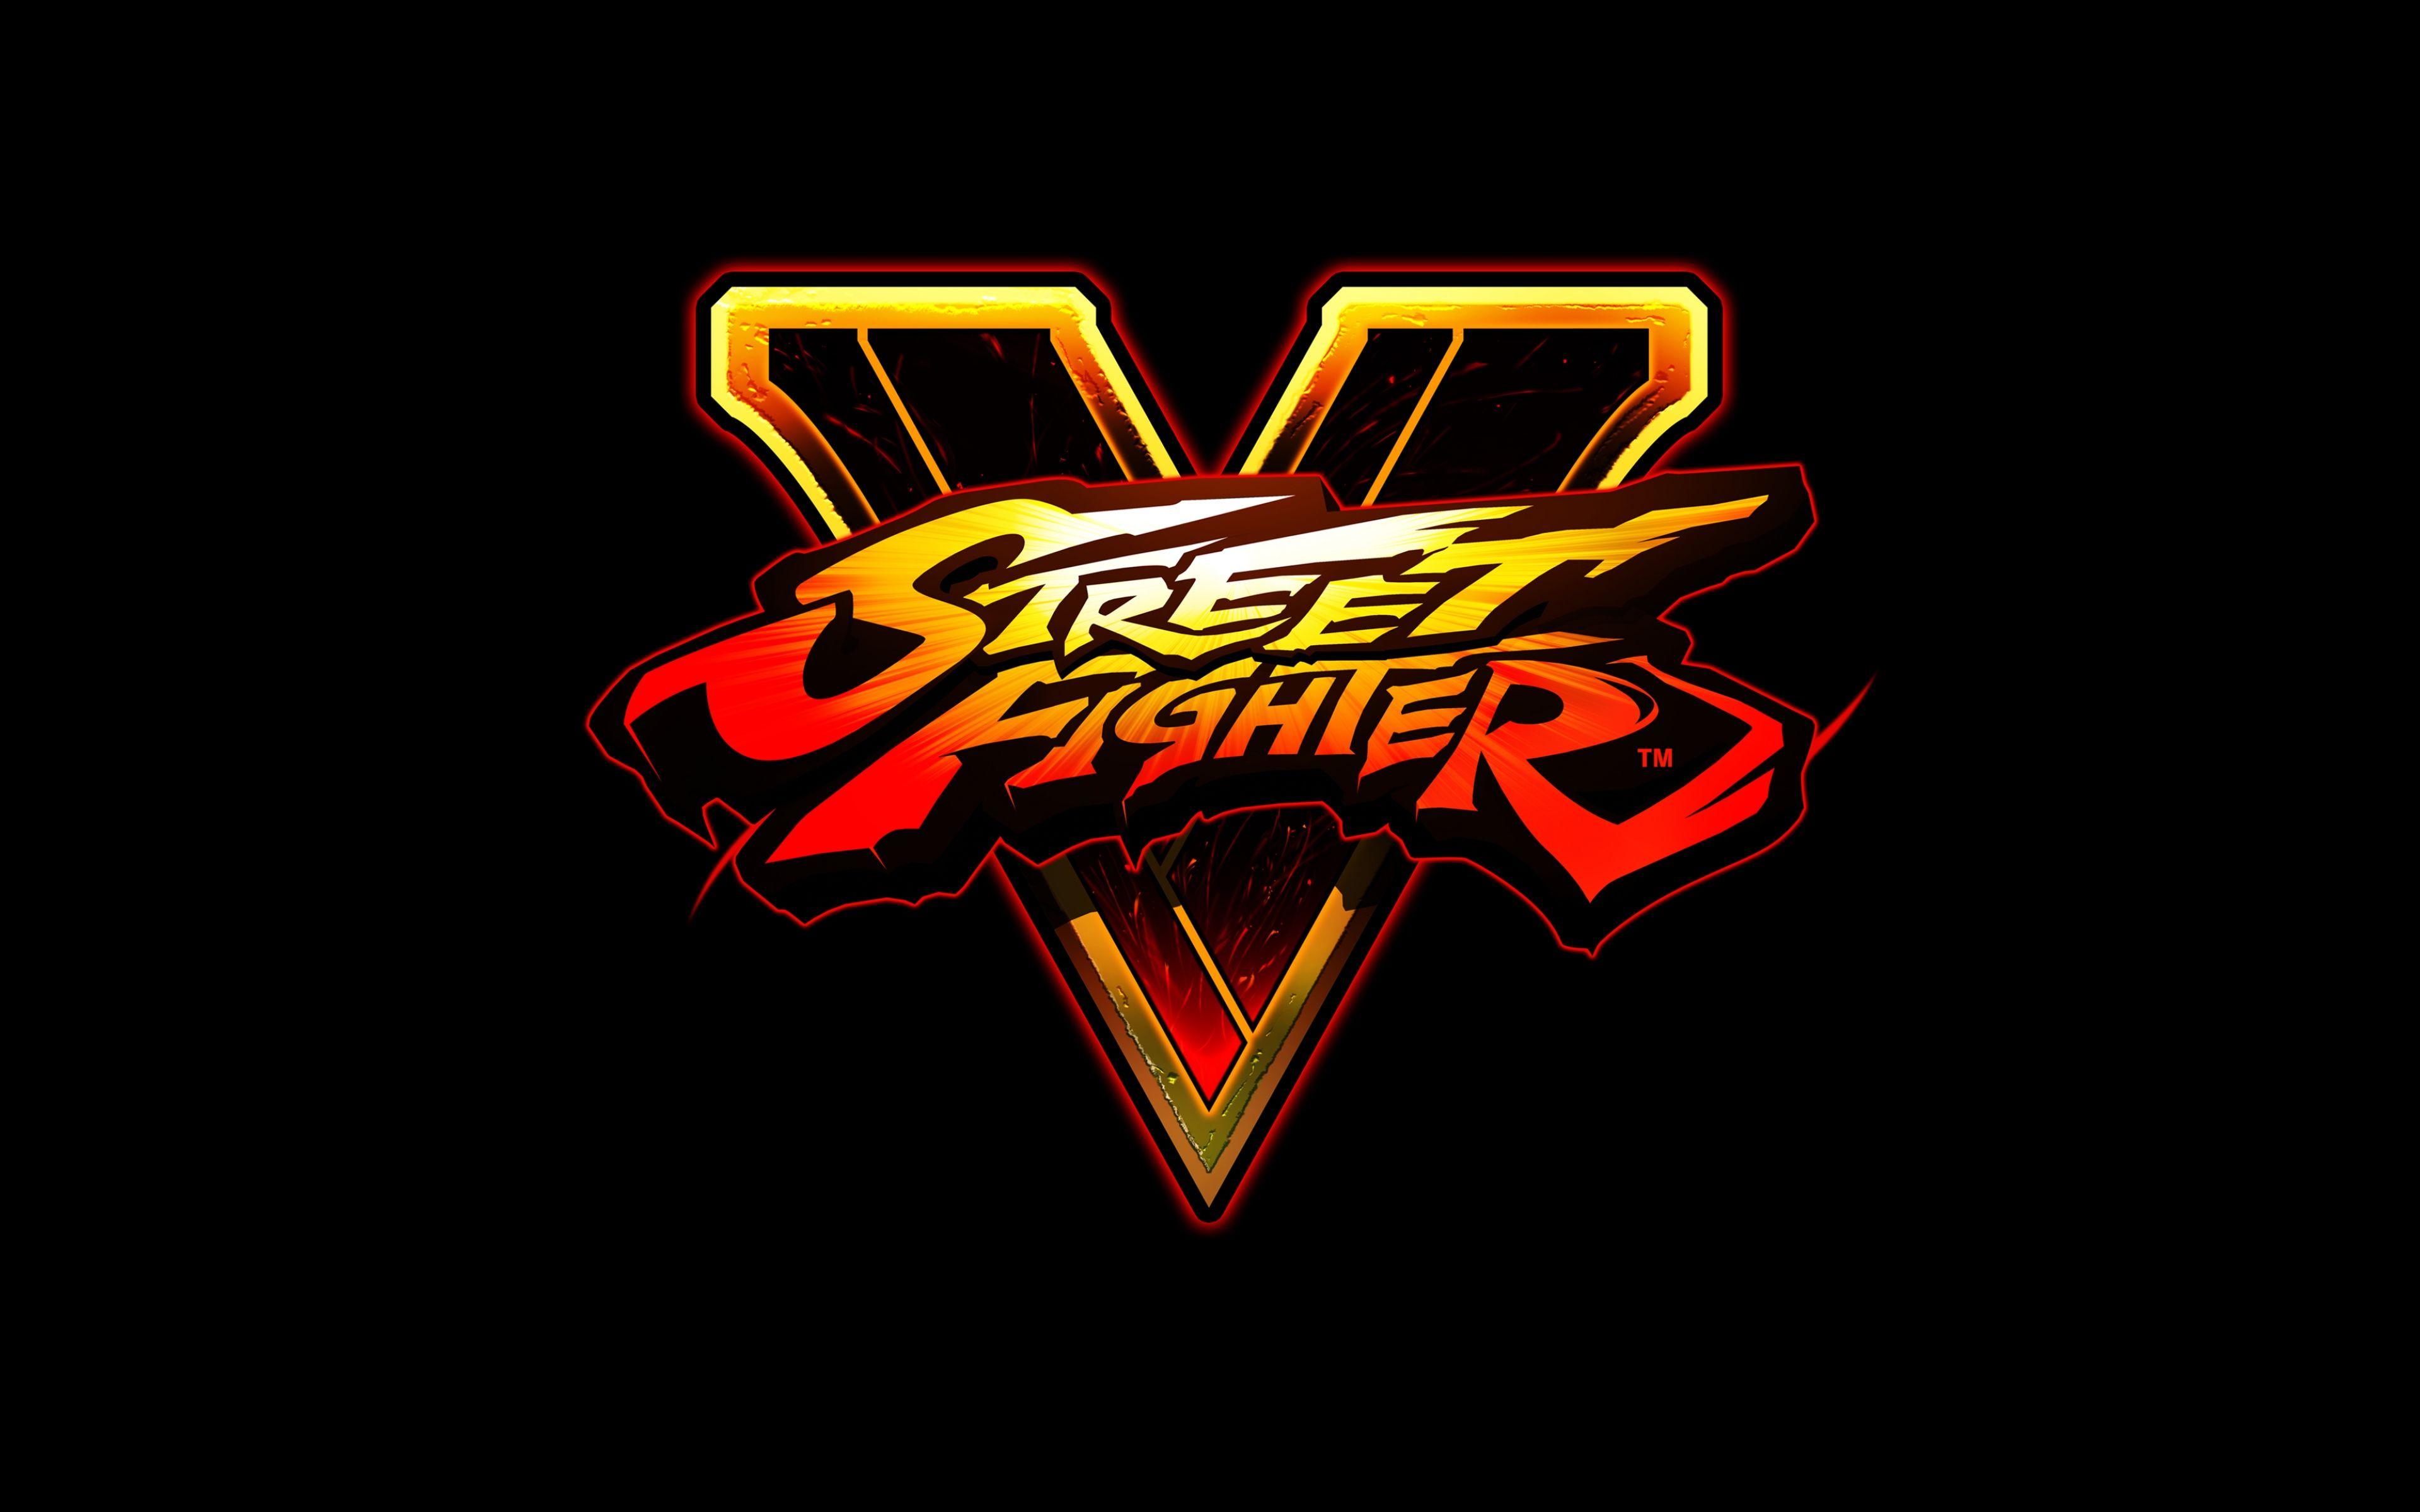 Street Fighter V Wallpaper on MarkInternational.info